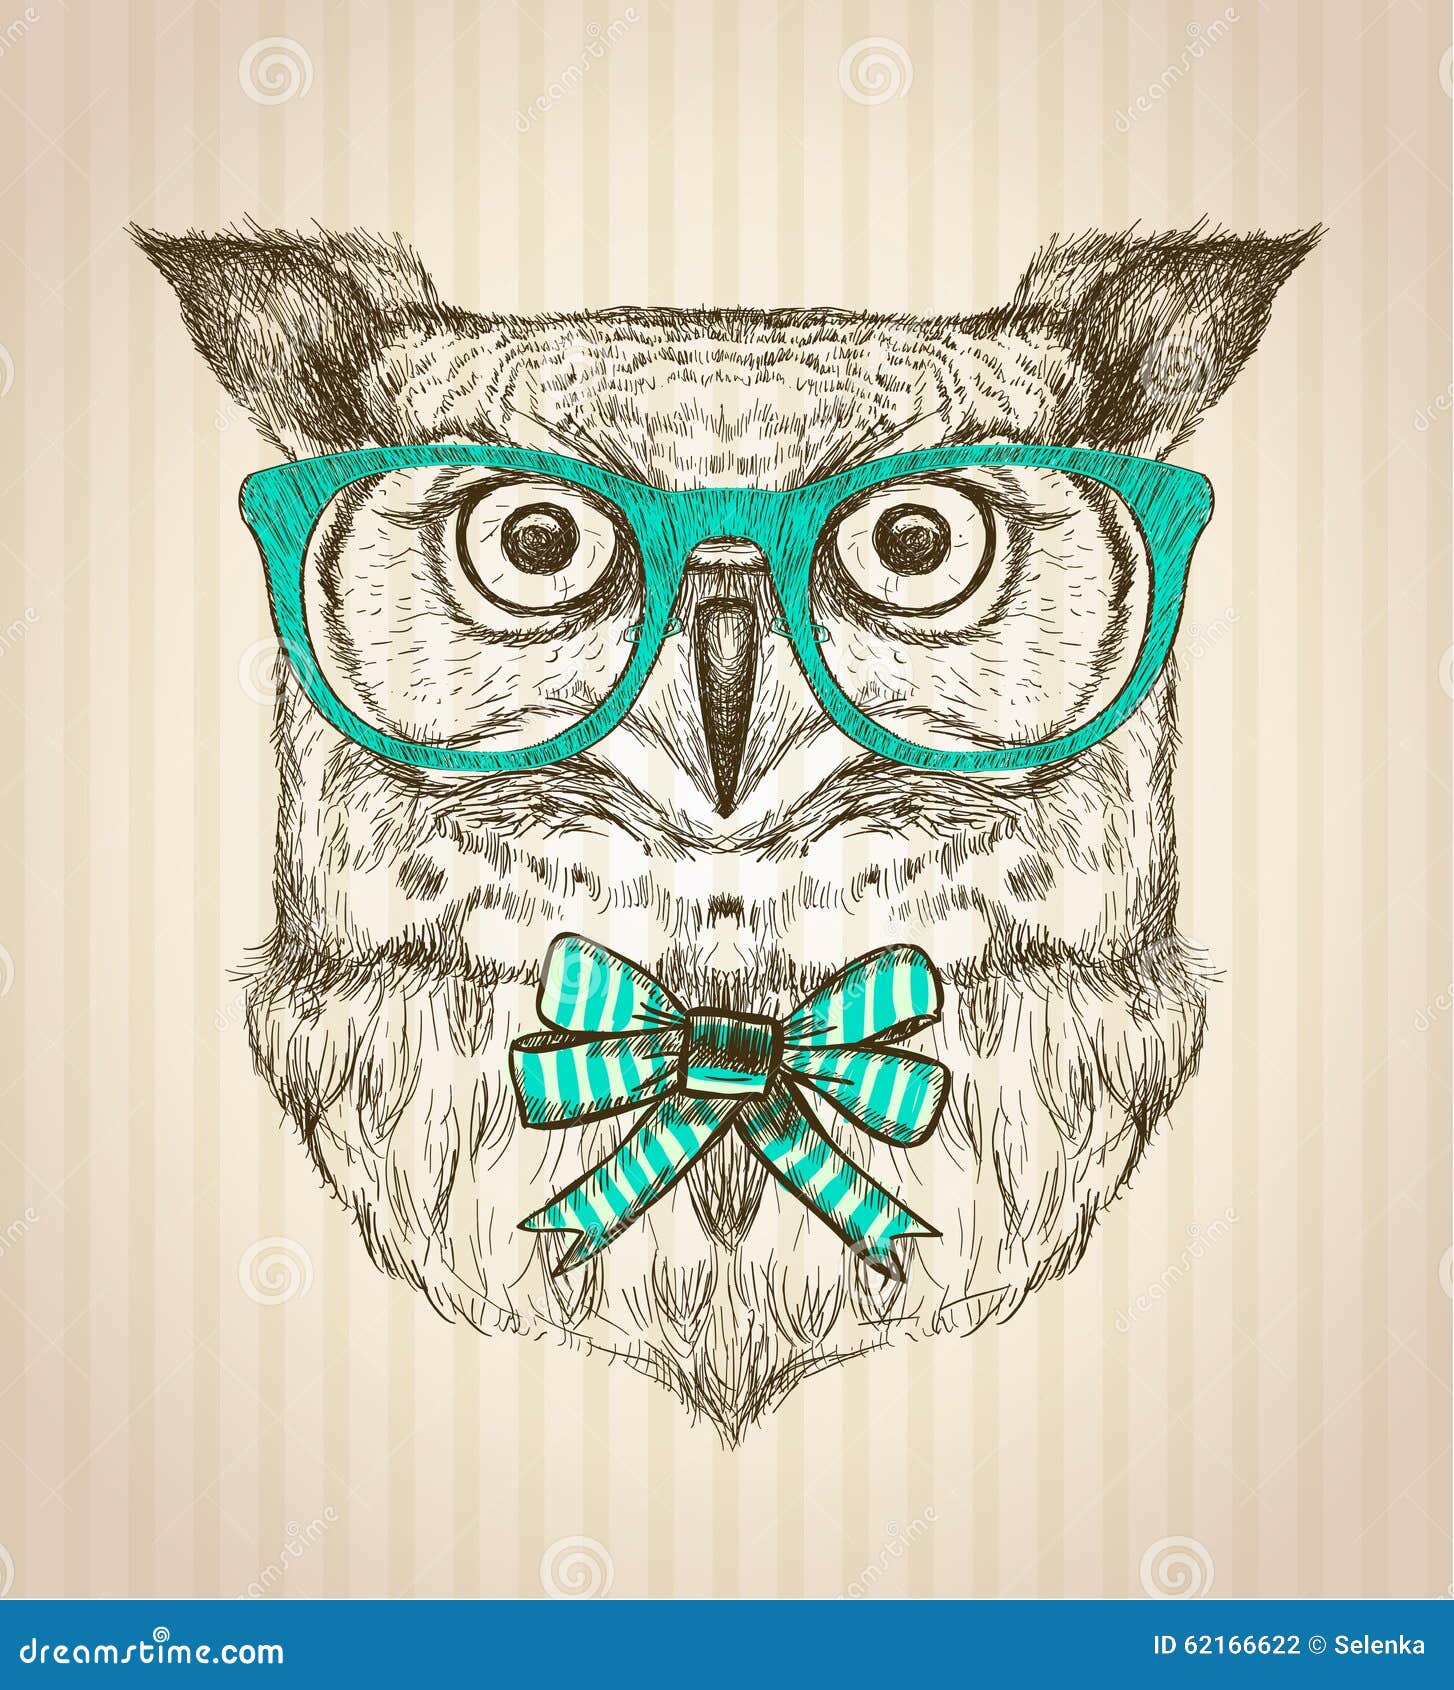 Hipster Owl Cartoon Vector | CartoonDealer.com #40148151